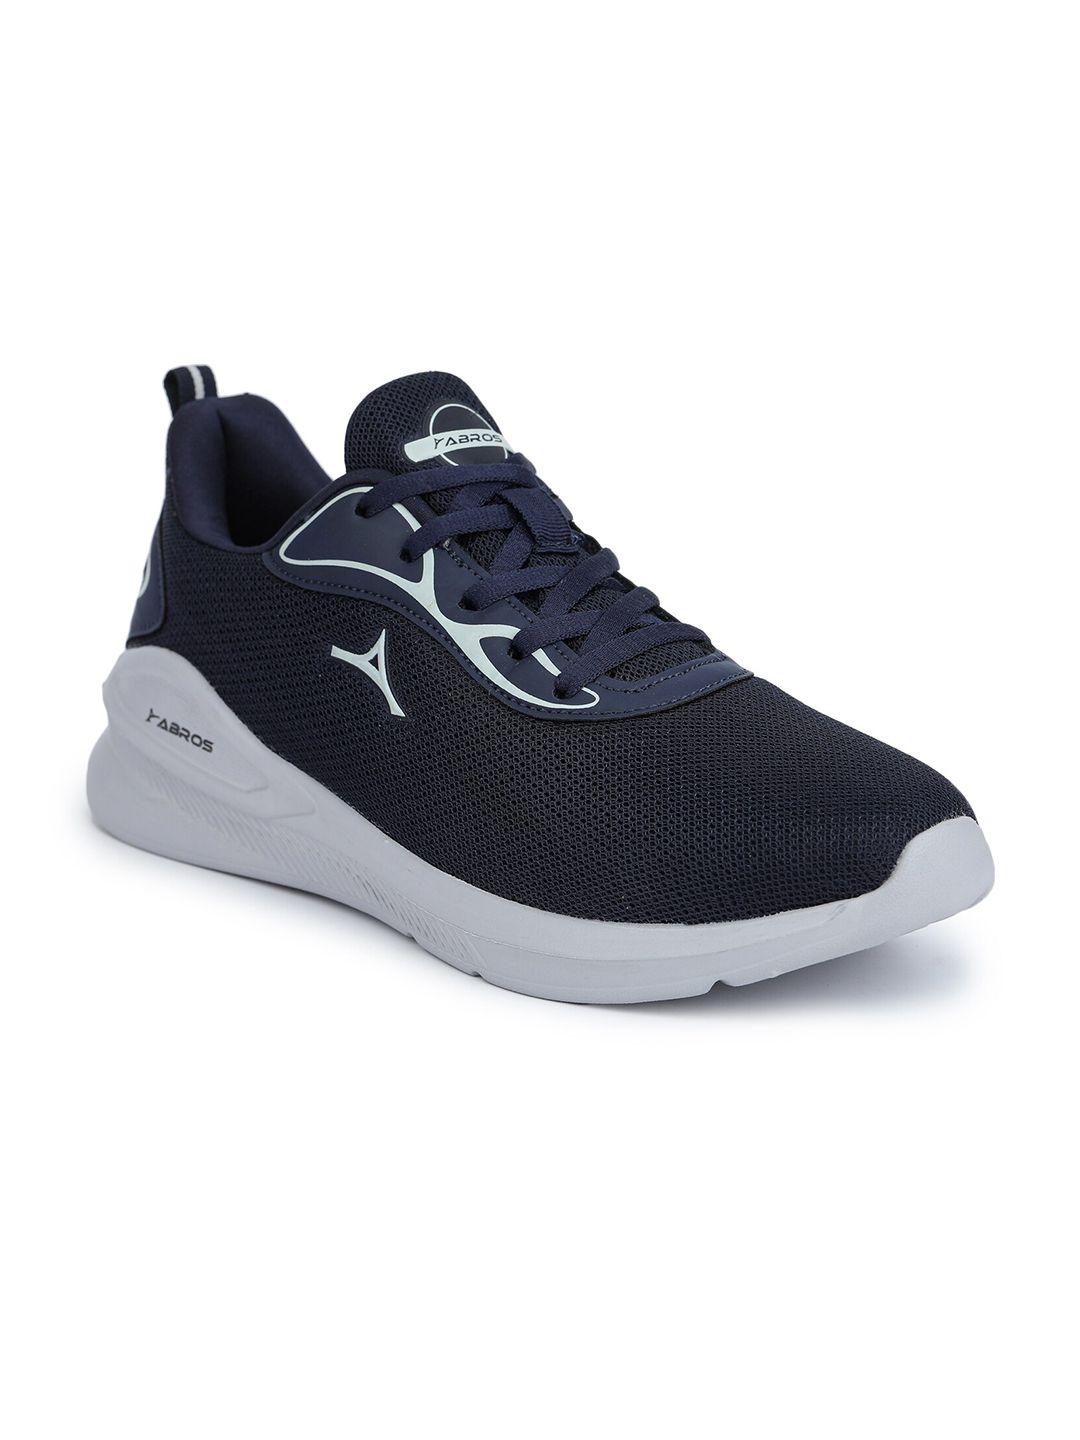 abros-men-navy-blue-mesh-running-shoes